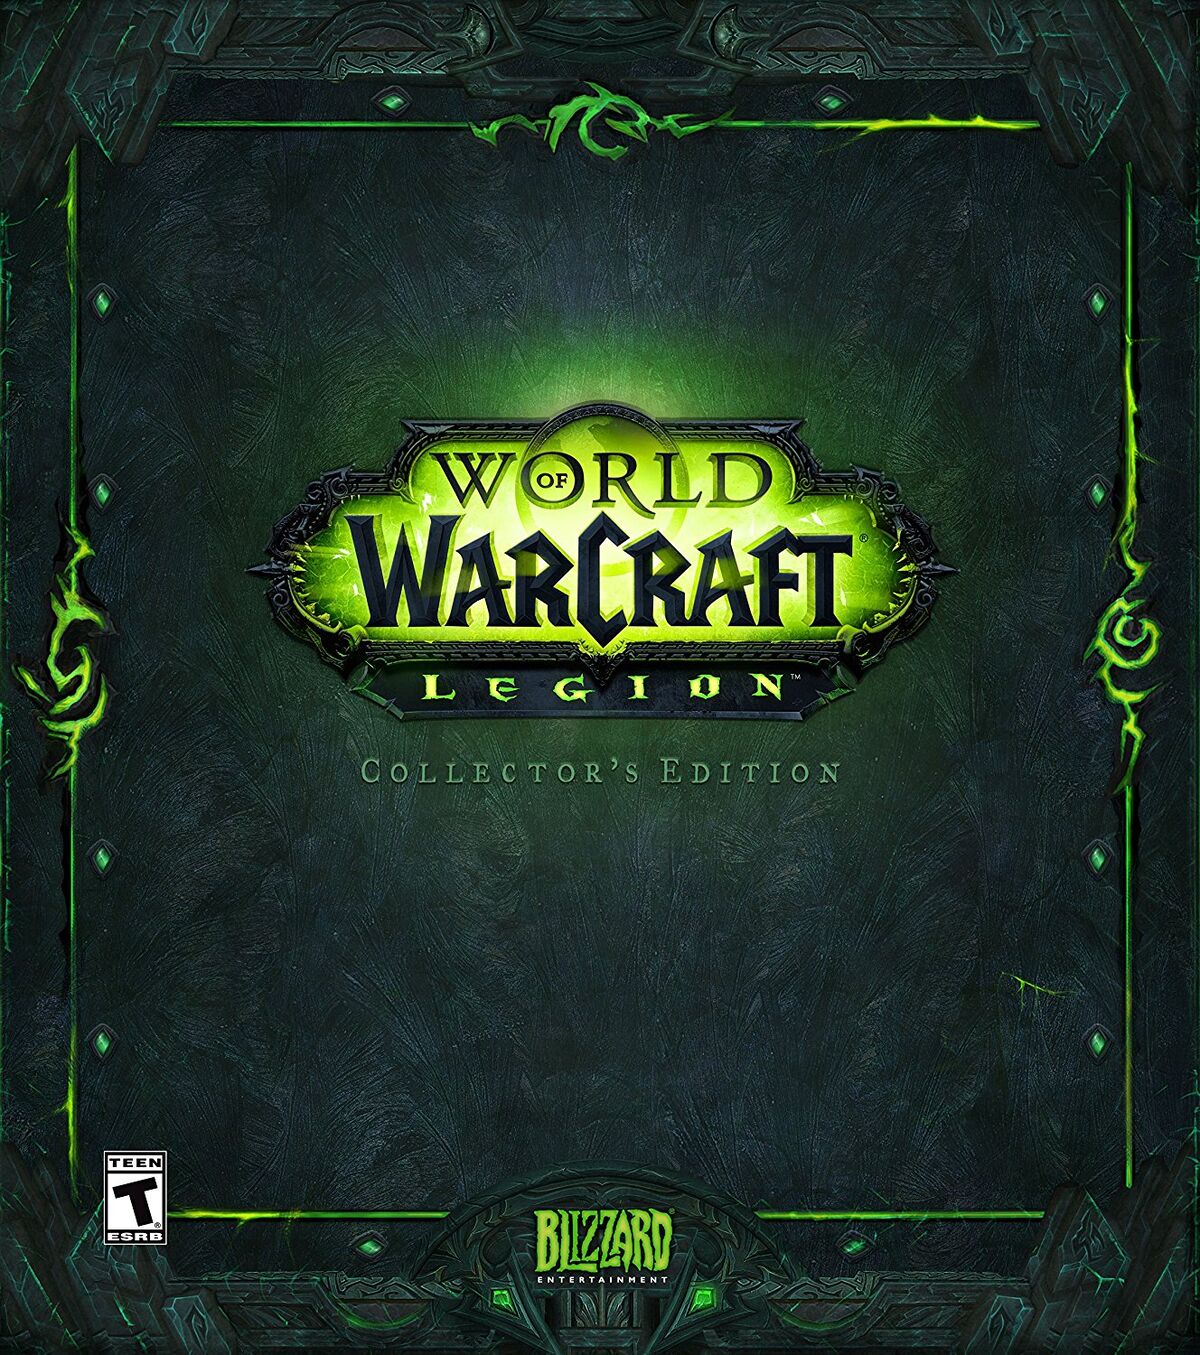 World of Warcraft: Legion - Wikipedia